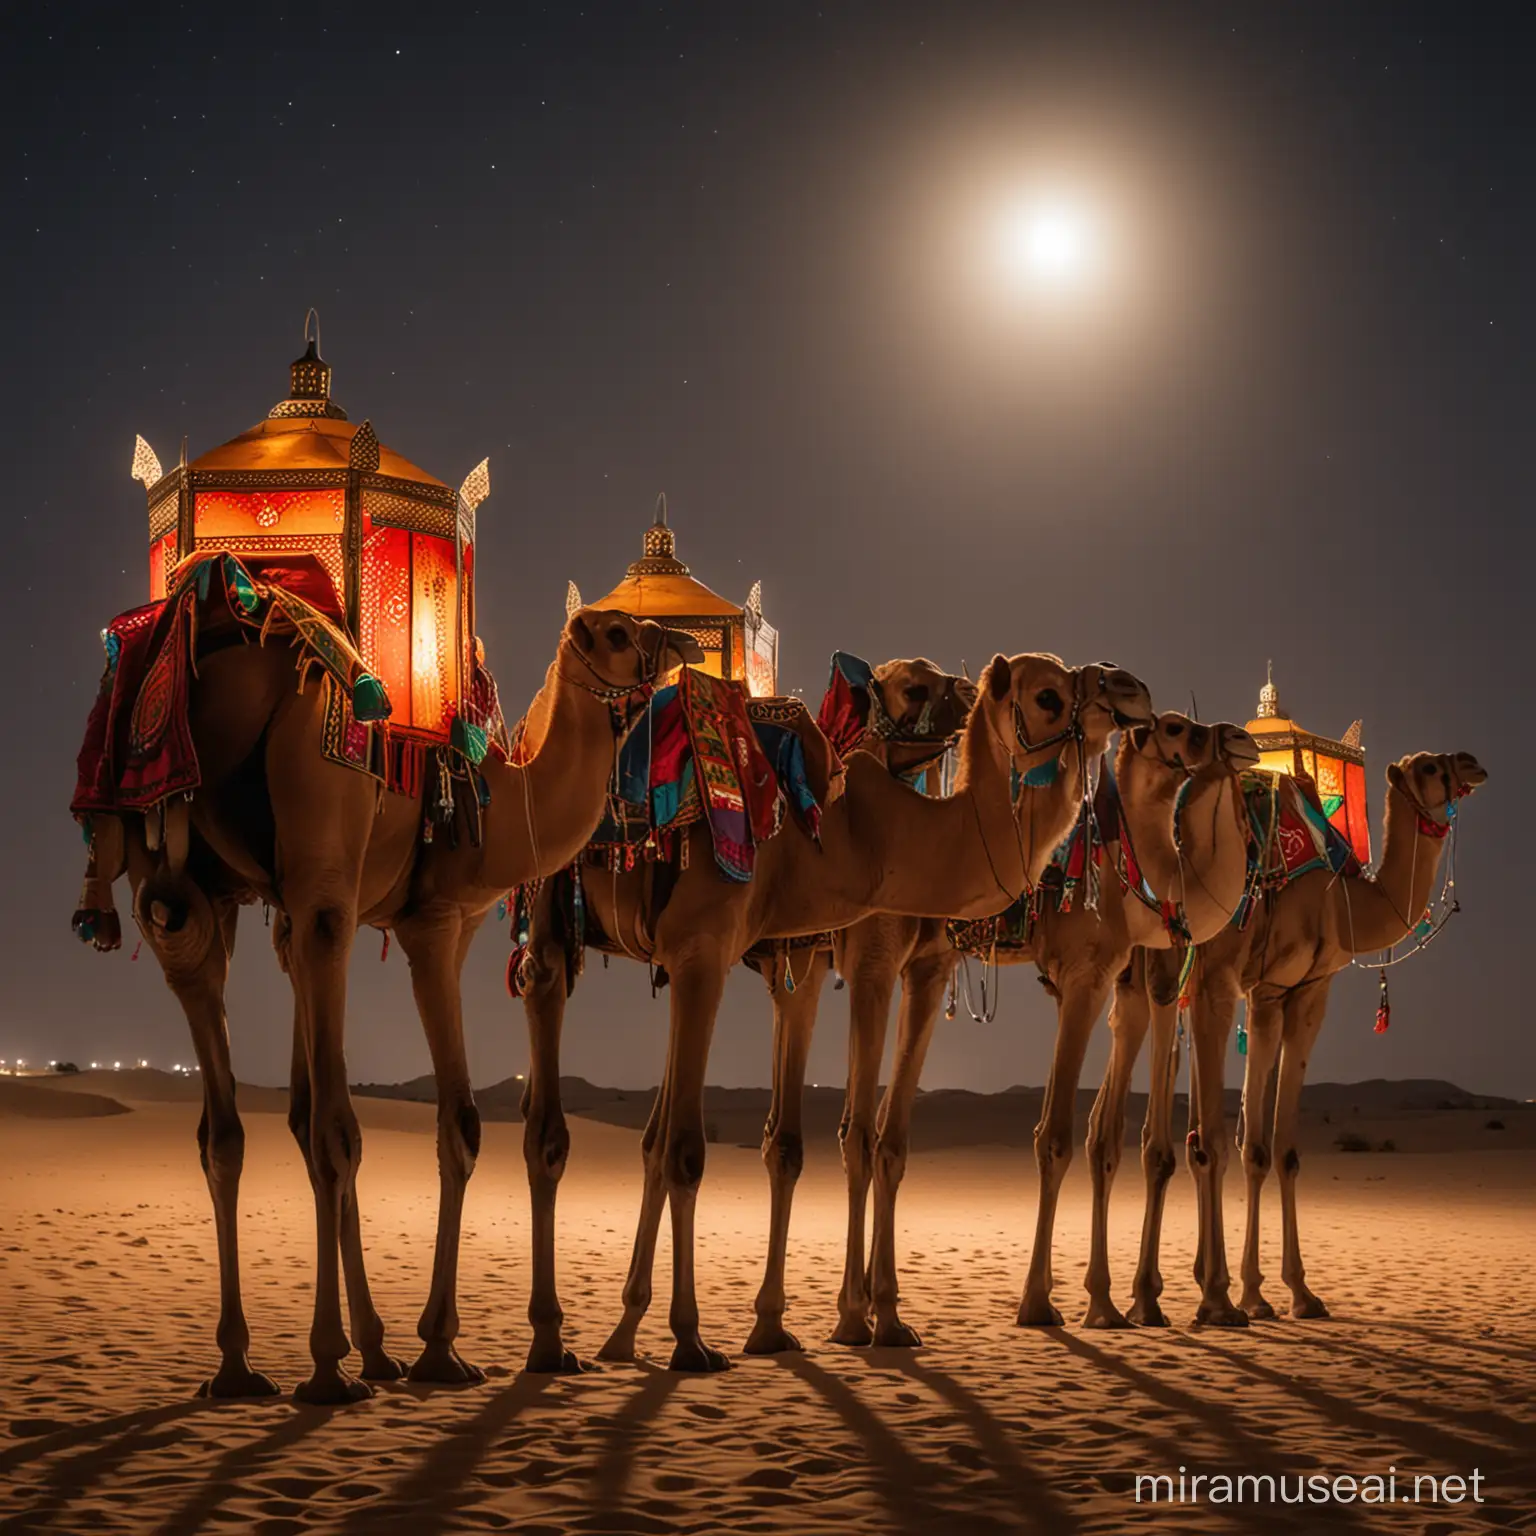 Big Arabian lanterns on camels' backs at night